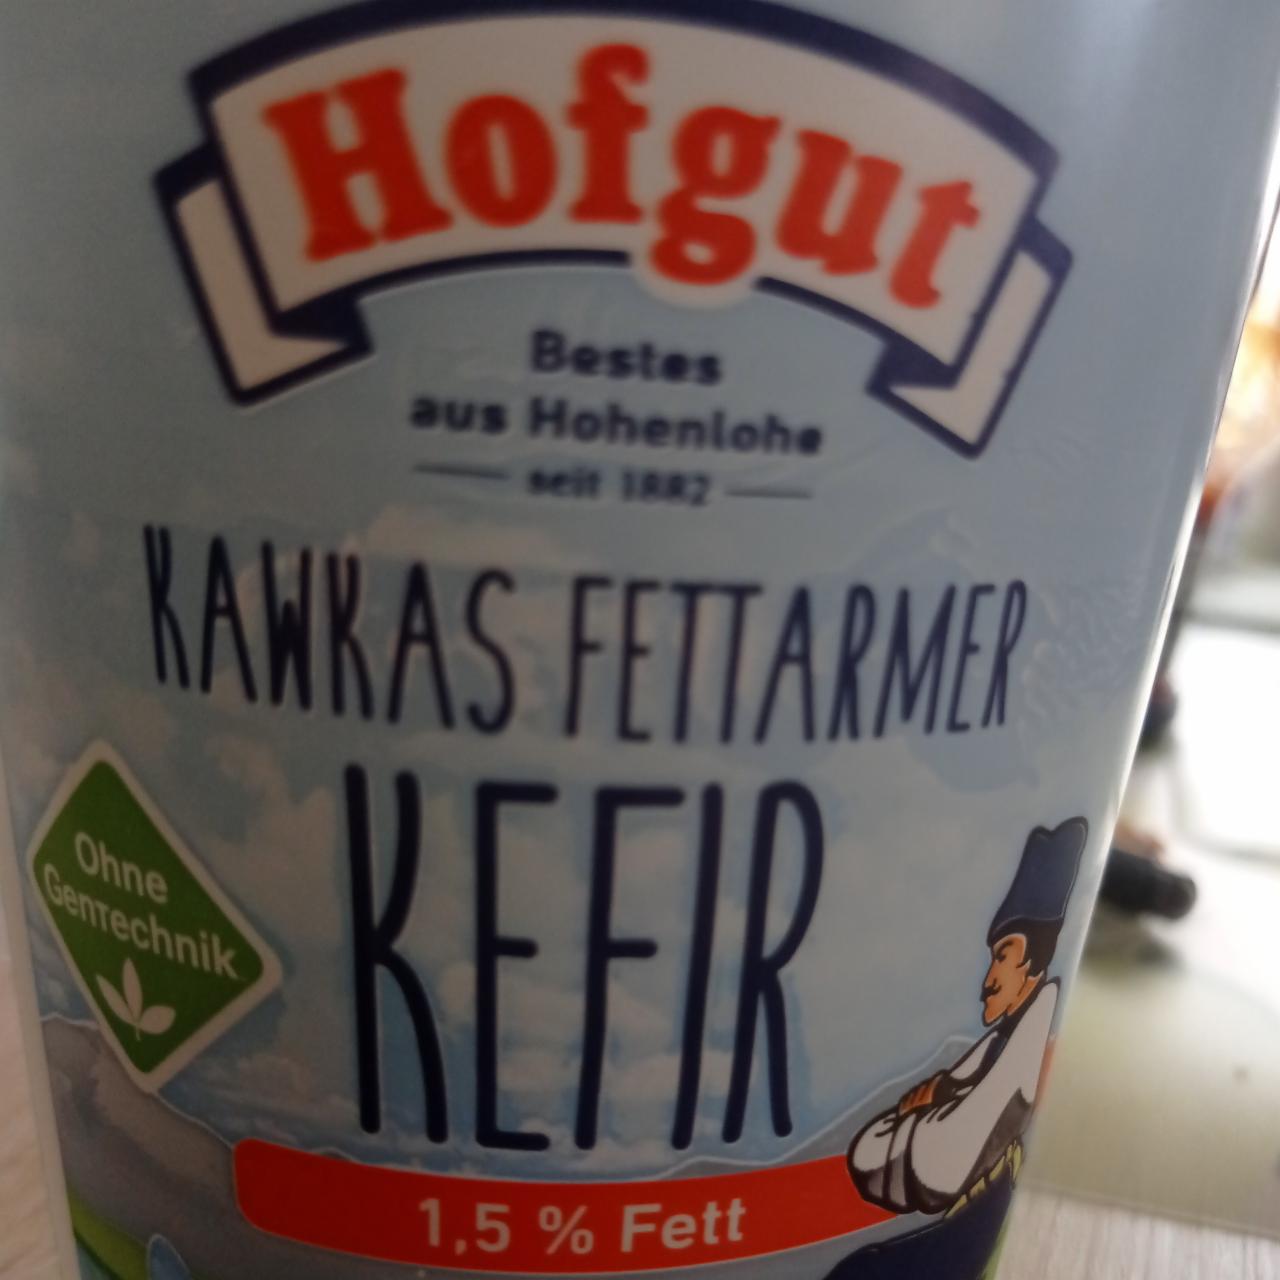 Fotografie - Hofgut fettarmer Kawkas Kefir mild, 1,5 % Fett